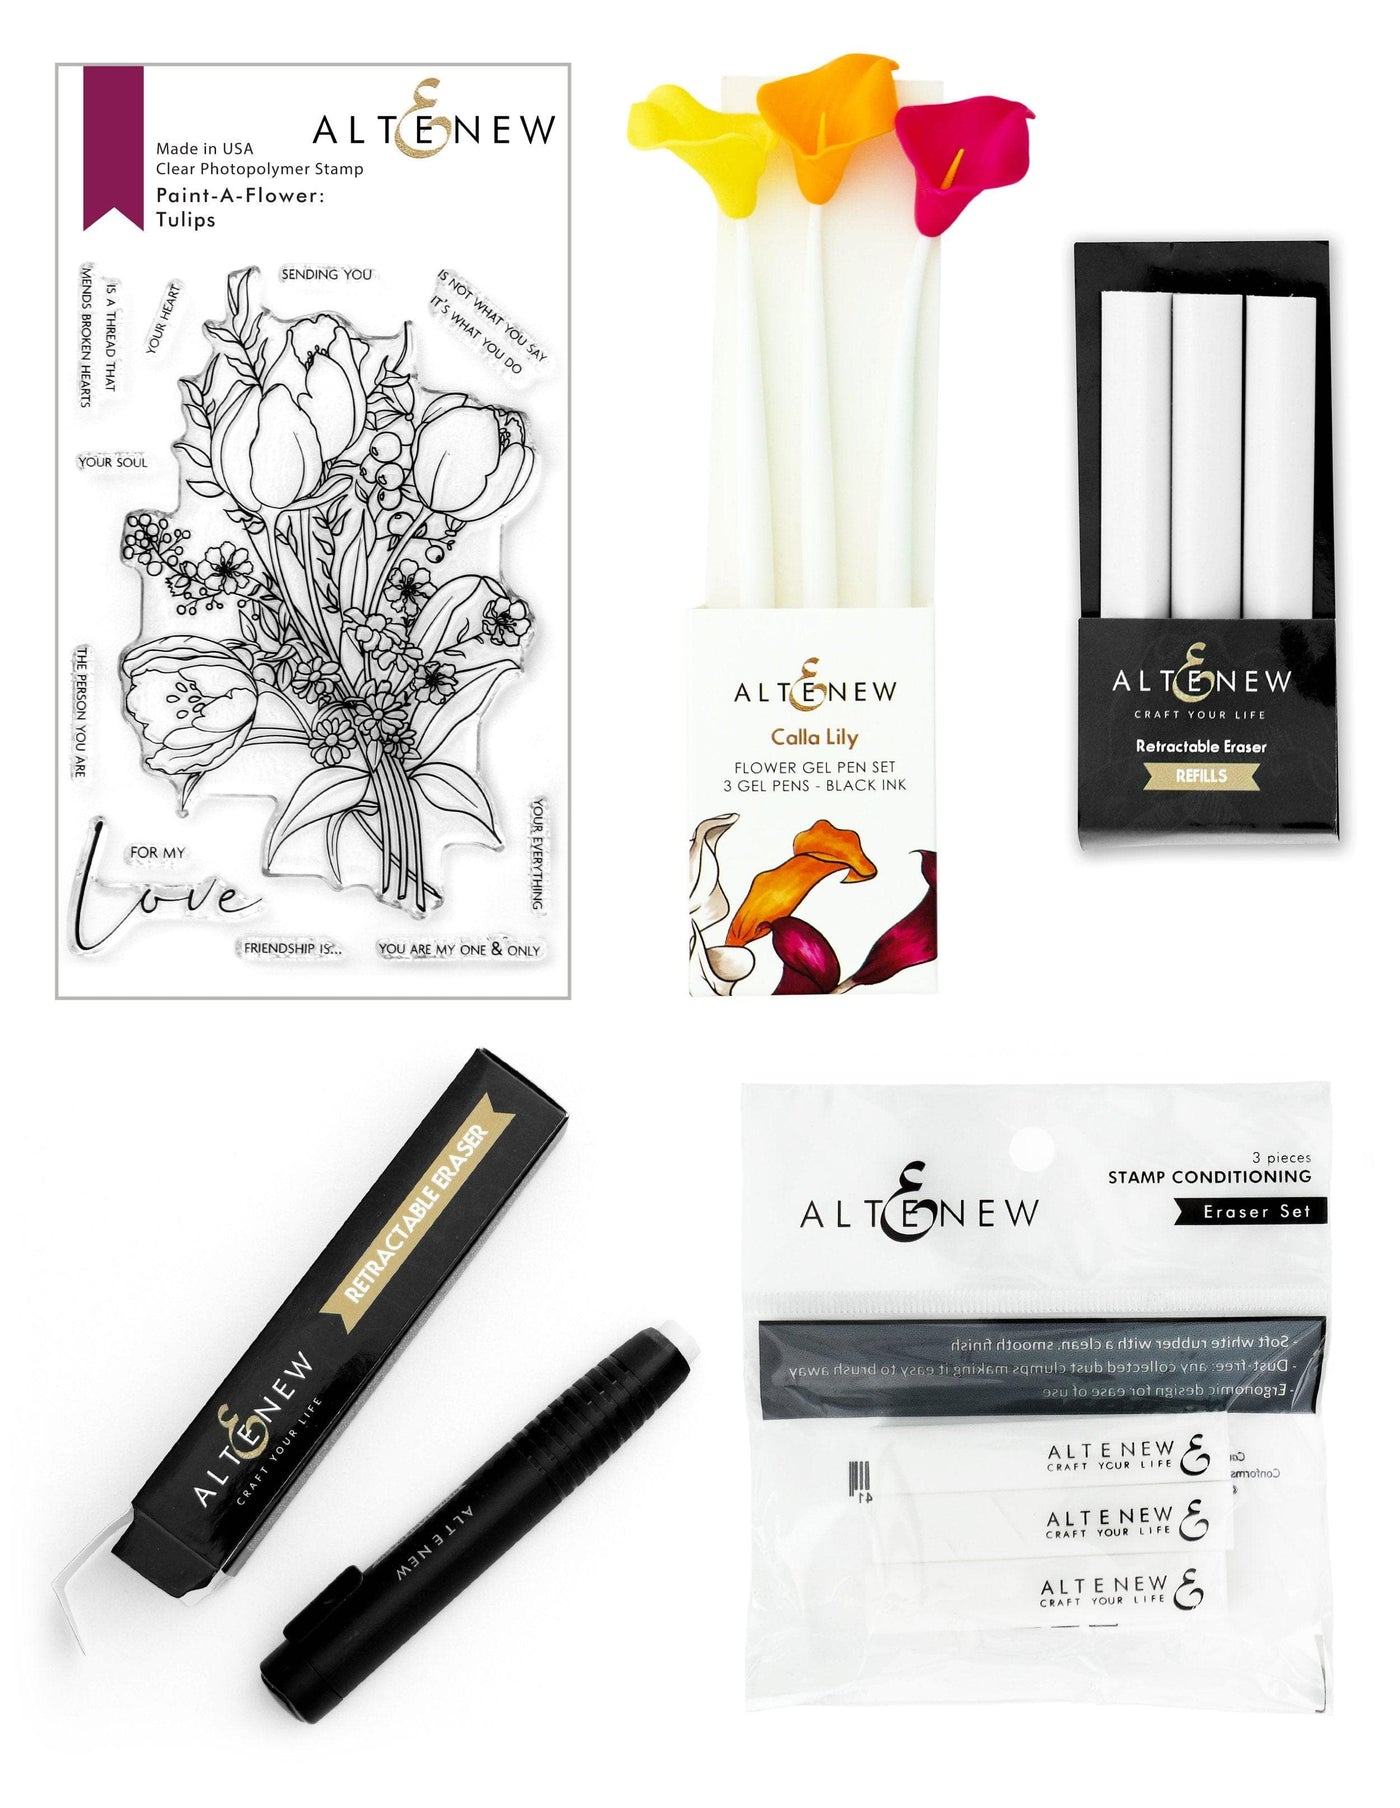 Promotional Durable Gel Pens That Write on Black Paper - China Plastic Pen,  Plastic Ball Pen